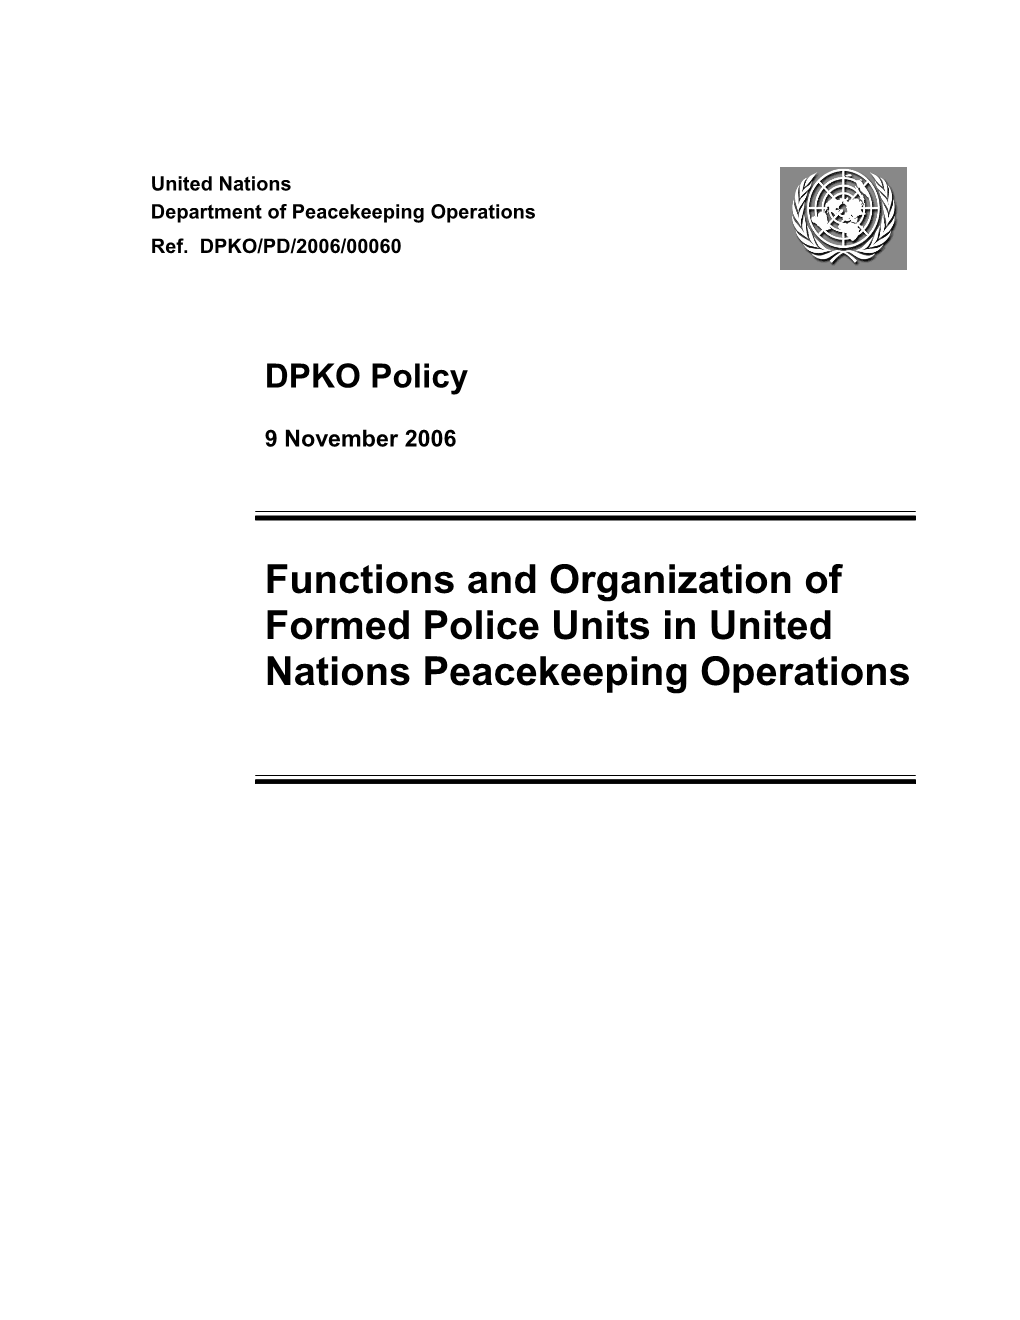 D. Description, Functions and Organization